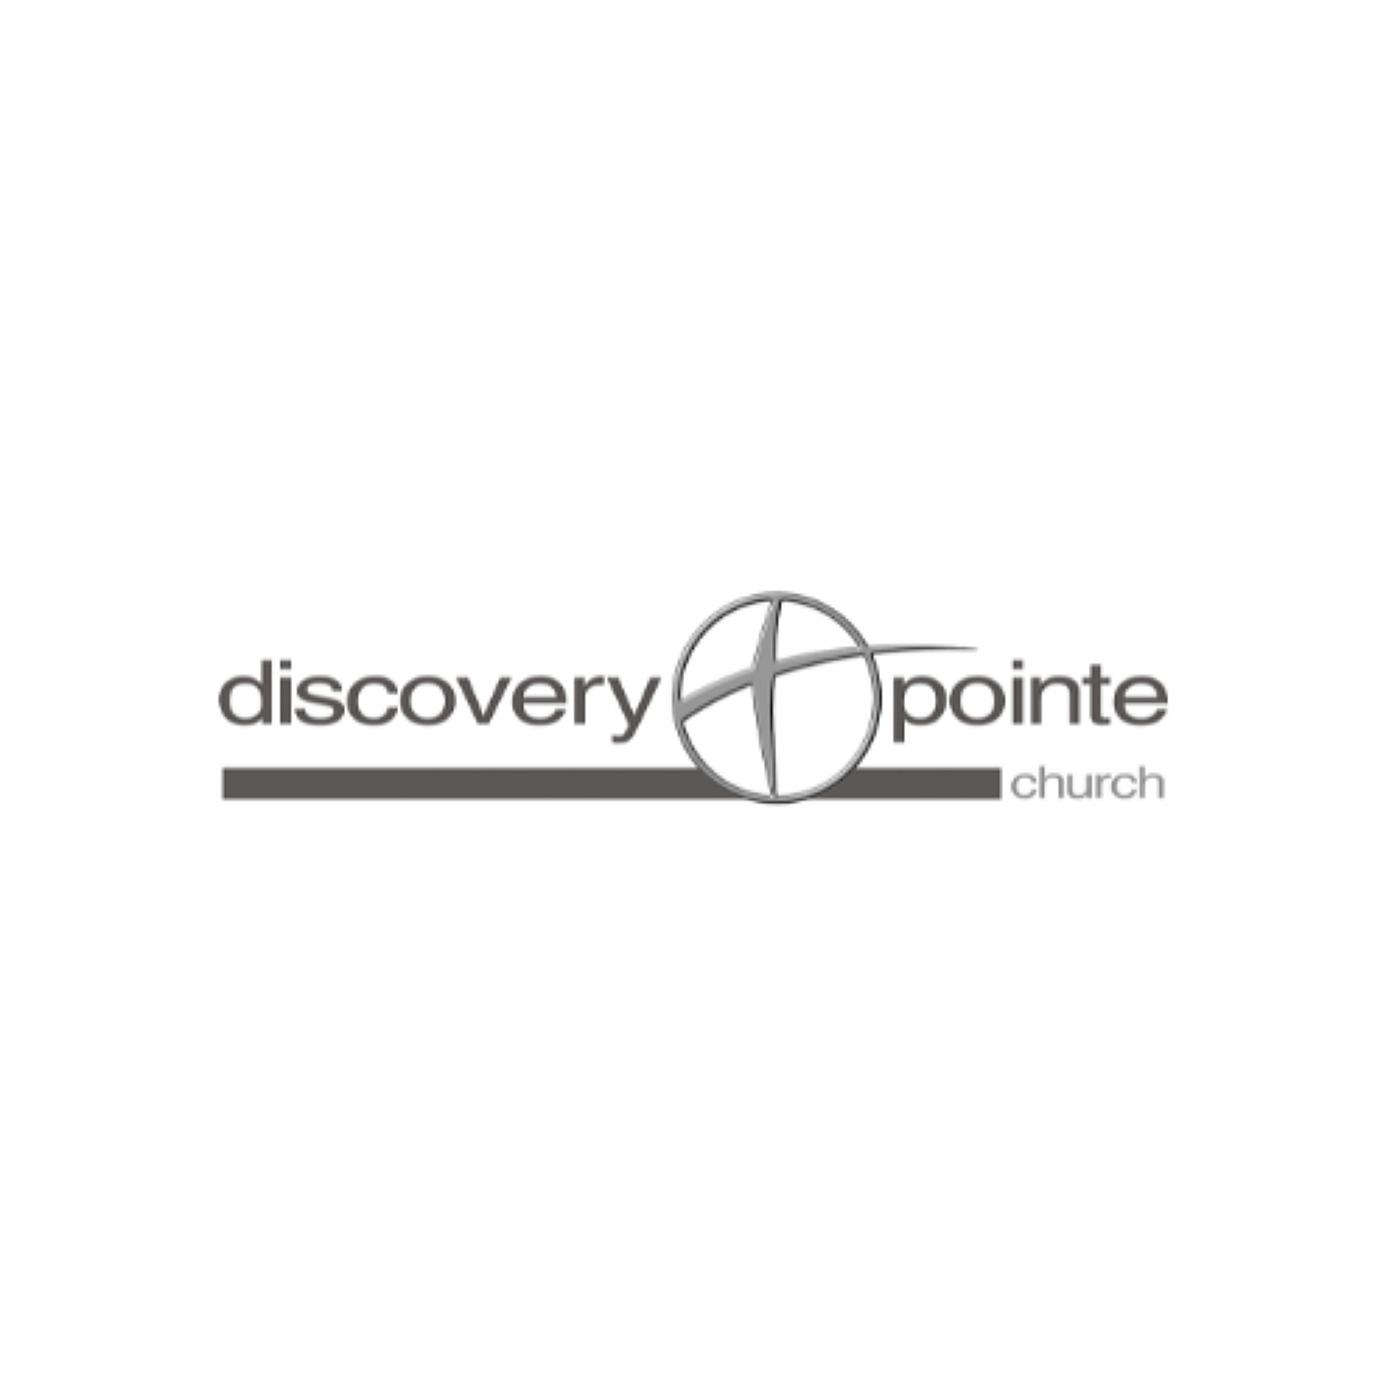 Discovery Pointe